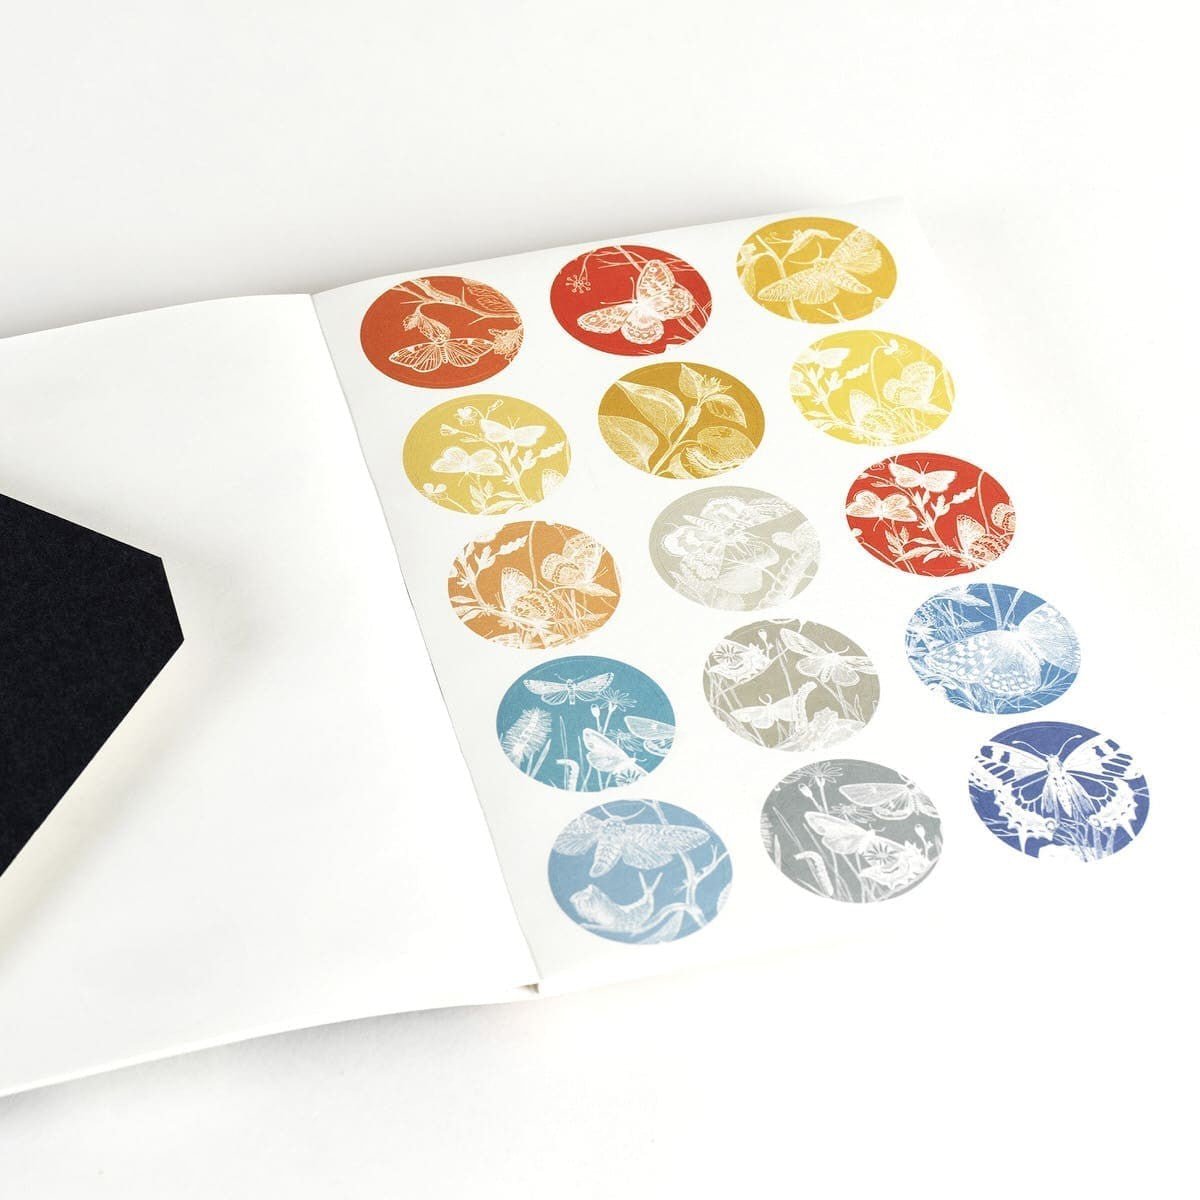 Pepin Labels, stickers & tape Sticker book - Butterflies - Pepin Press - Tidformera